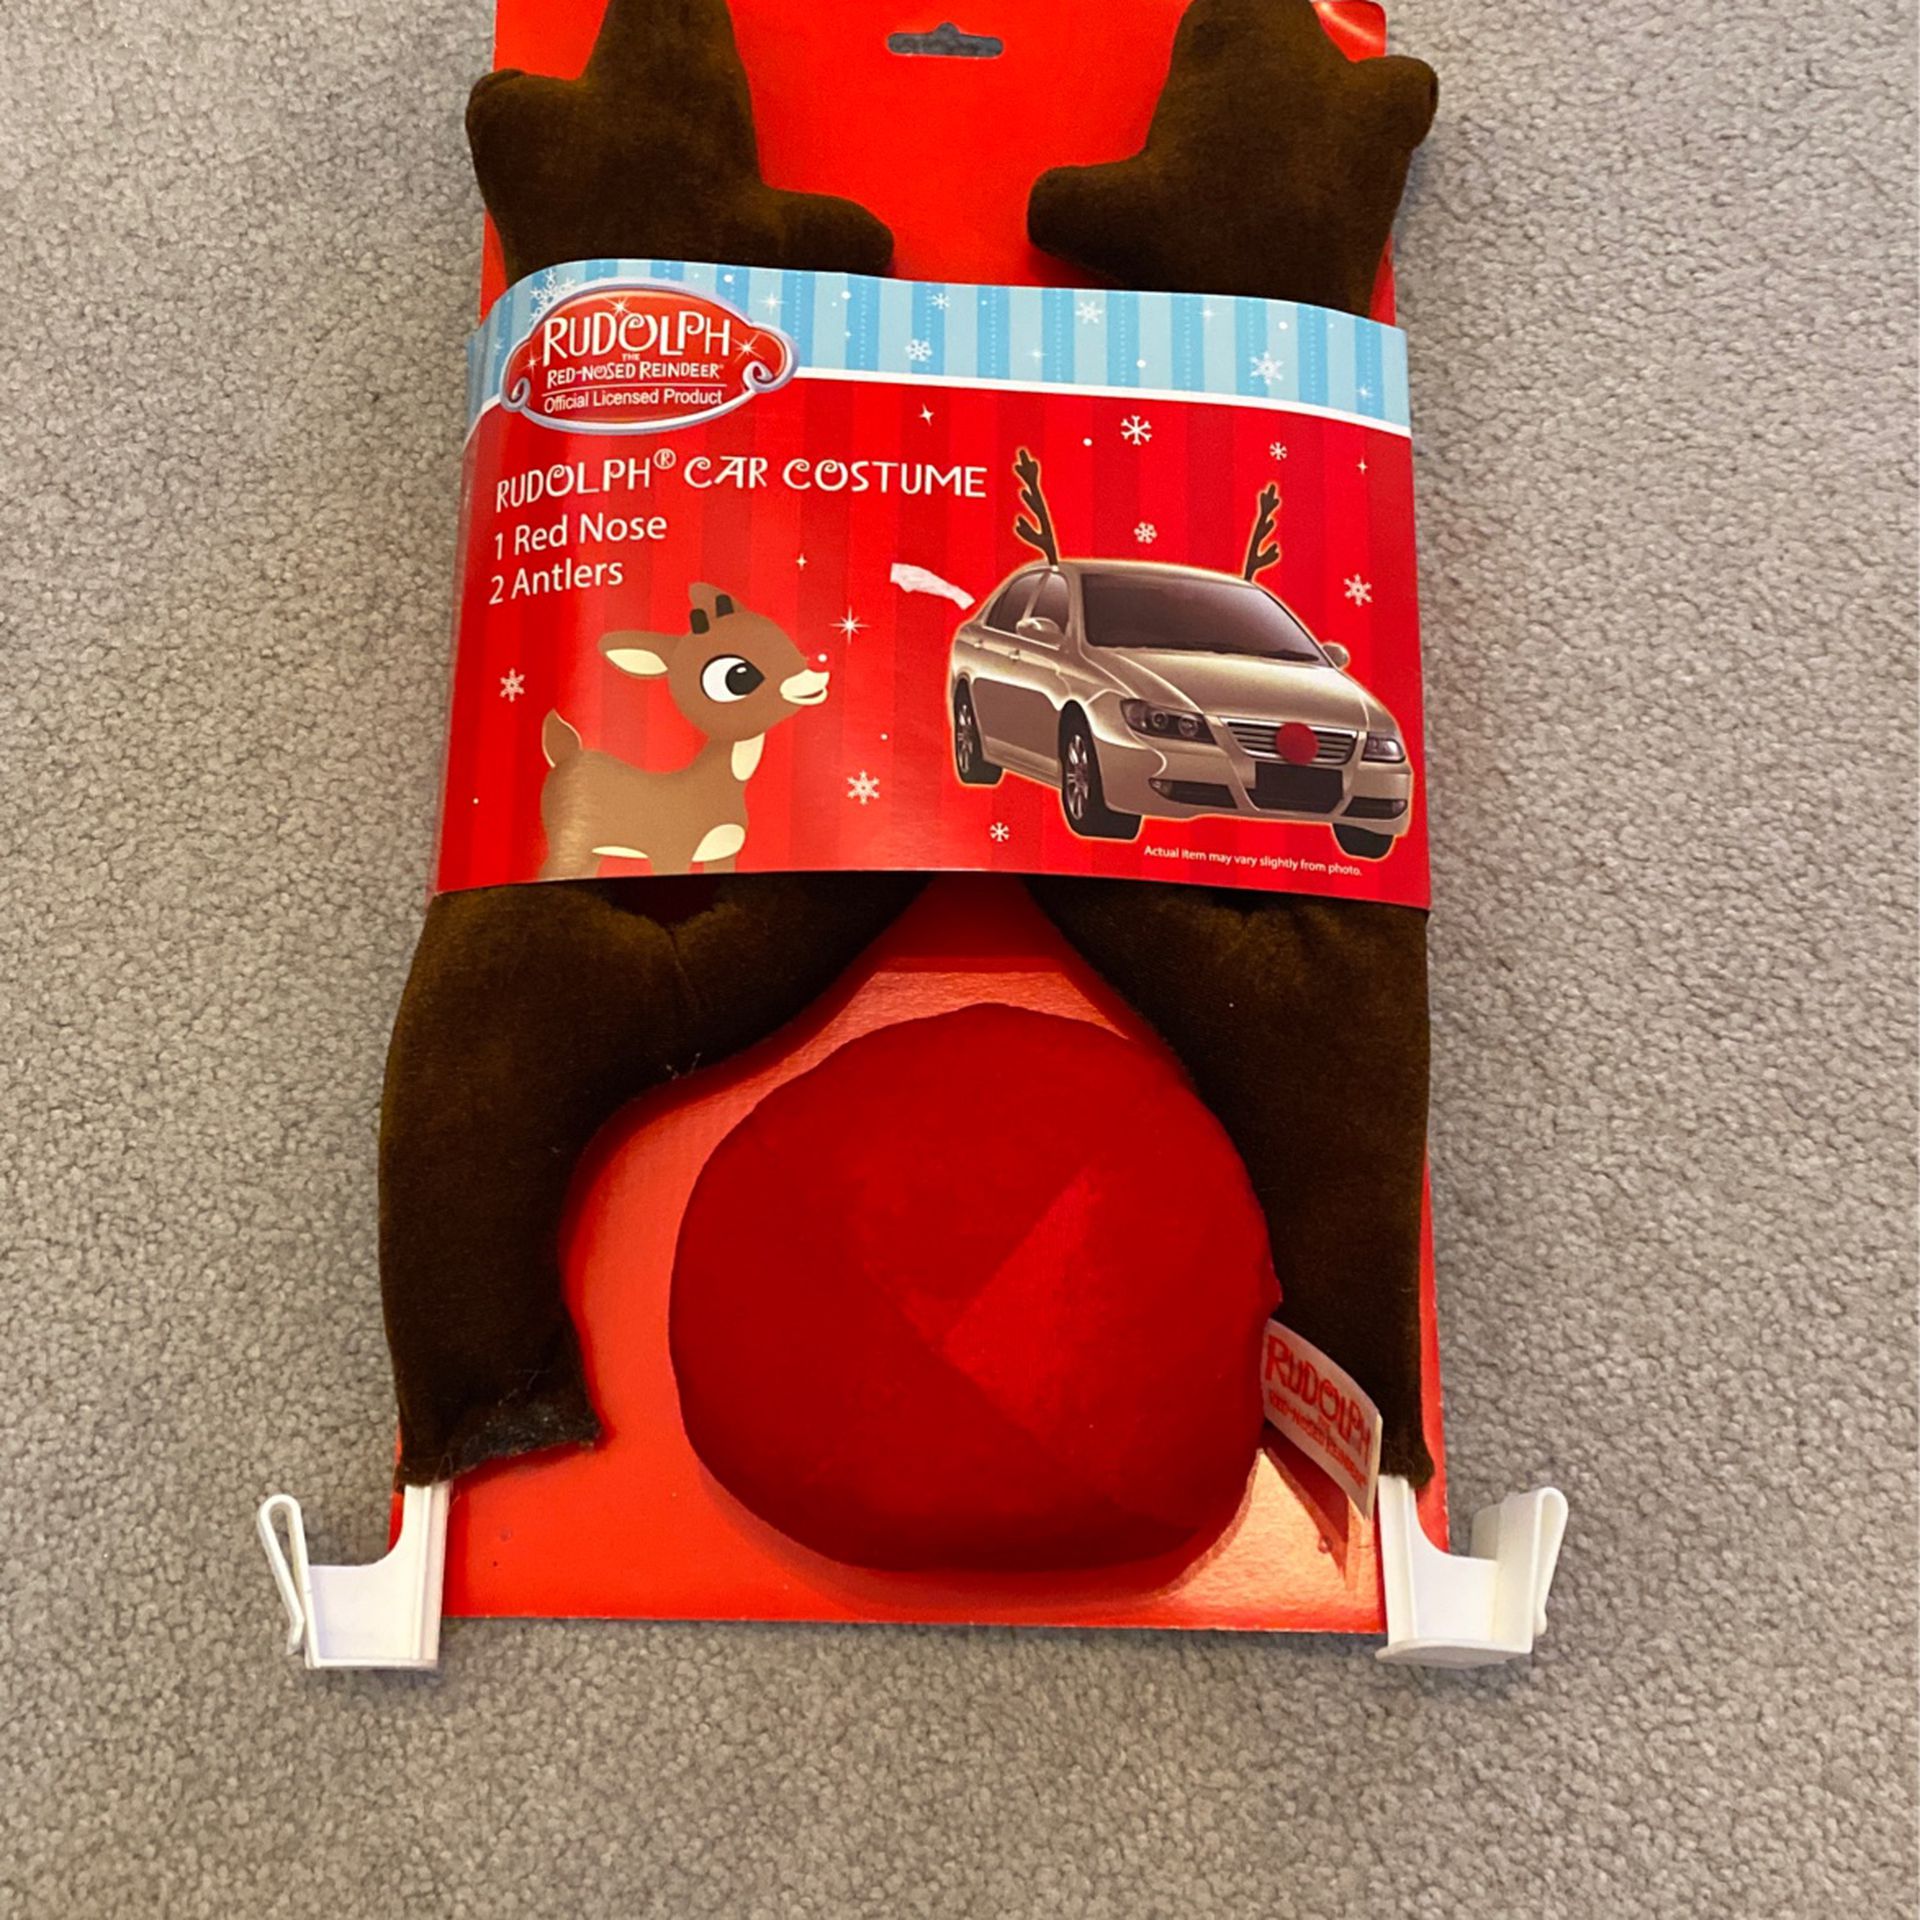 Rudolph Car Costume, New in Original Packaging